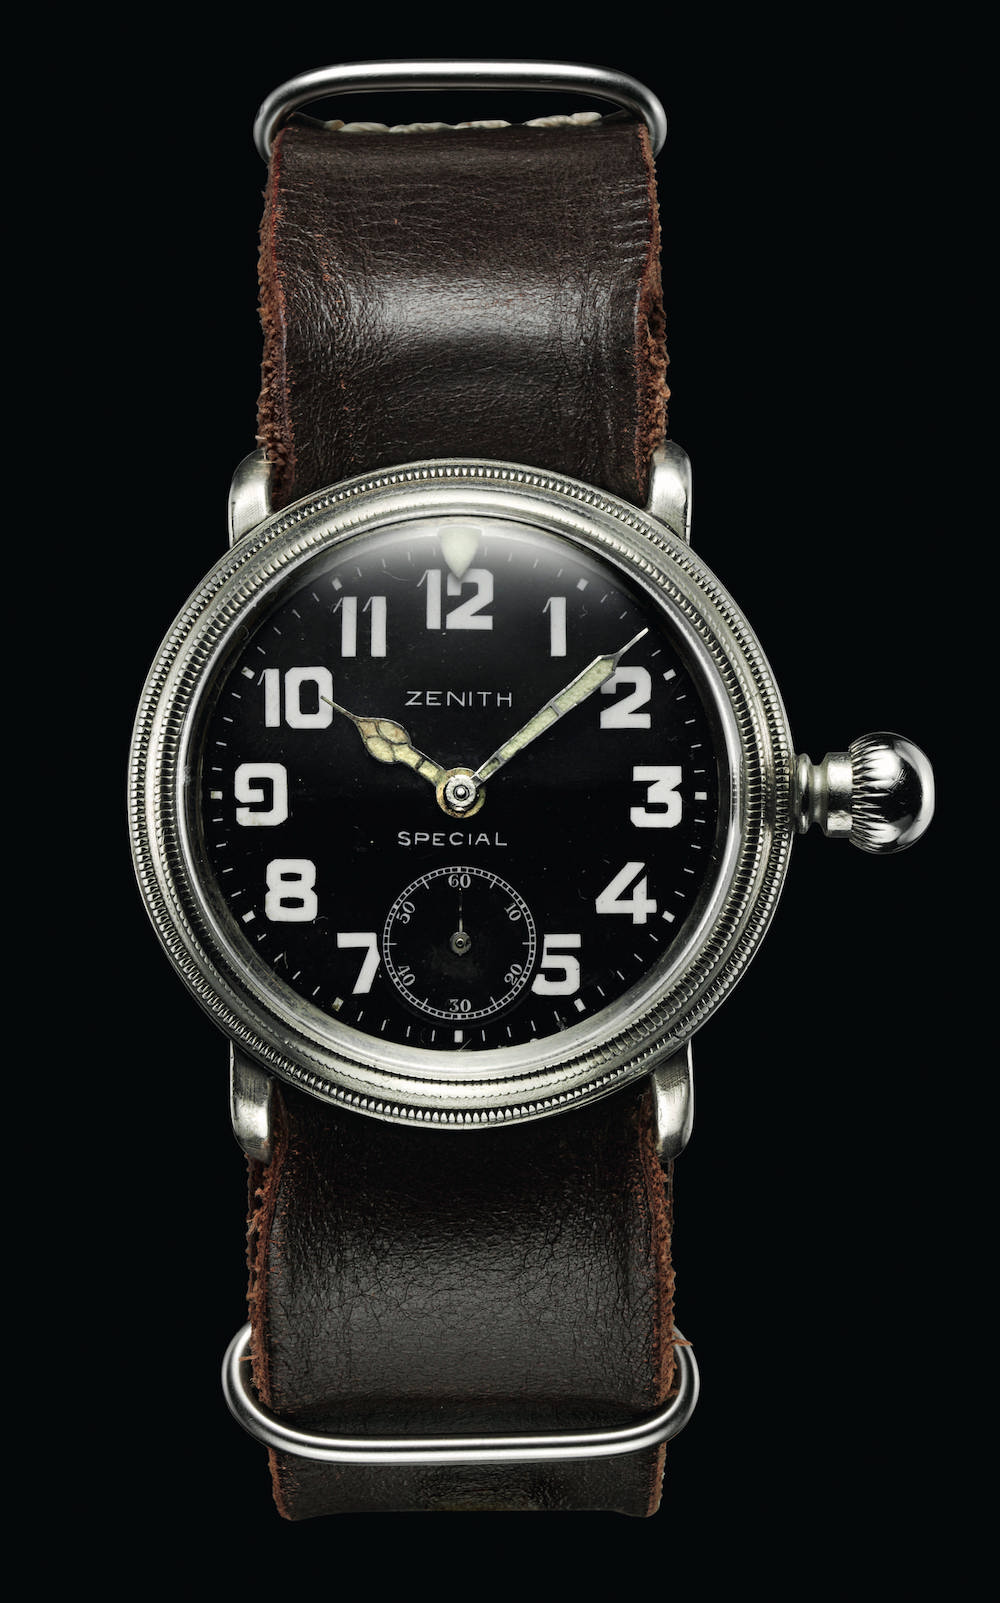 Historical-Louis-Blériot-zenith-watch-front-black